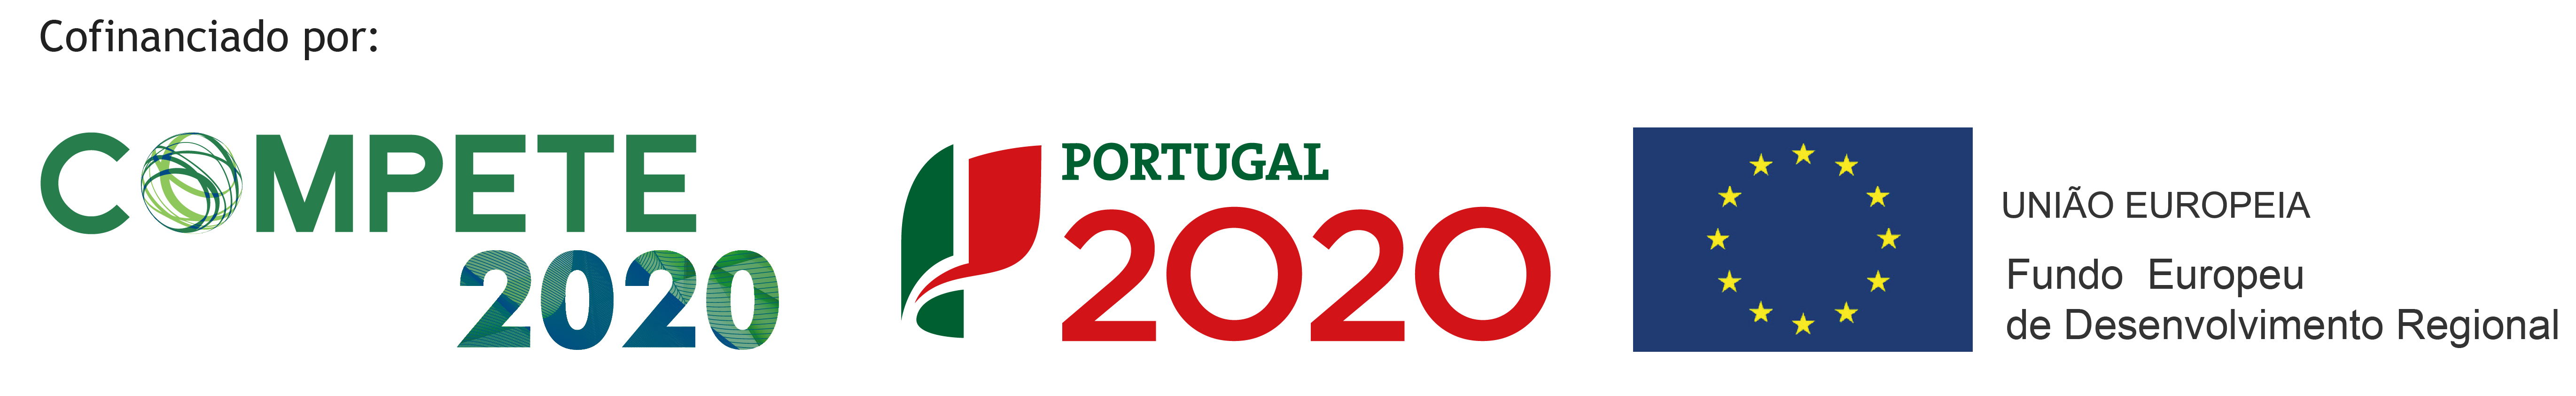 portugal2020